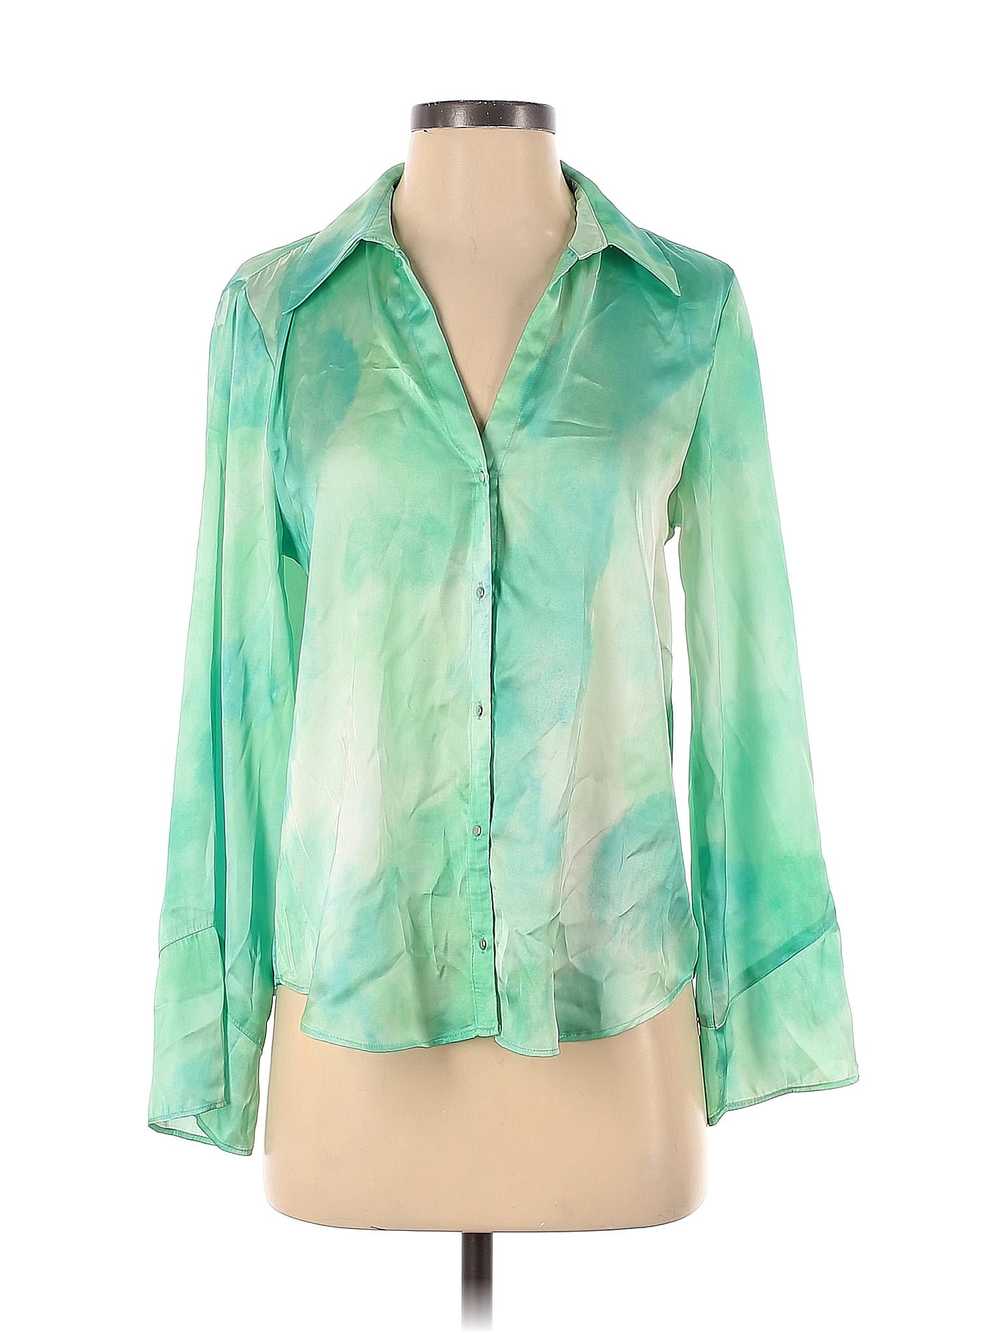 Zara Women Green Long Sleeve Blouse S - image 1